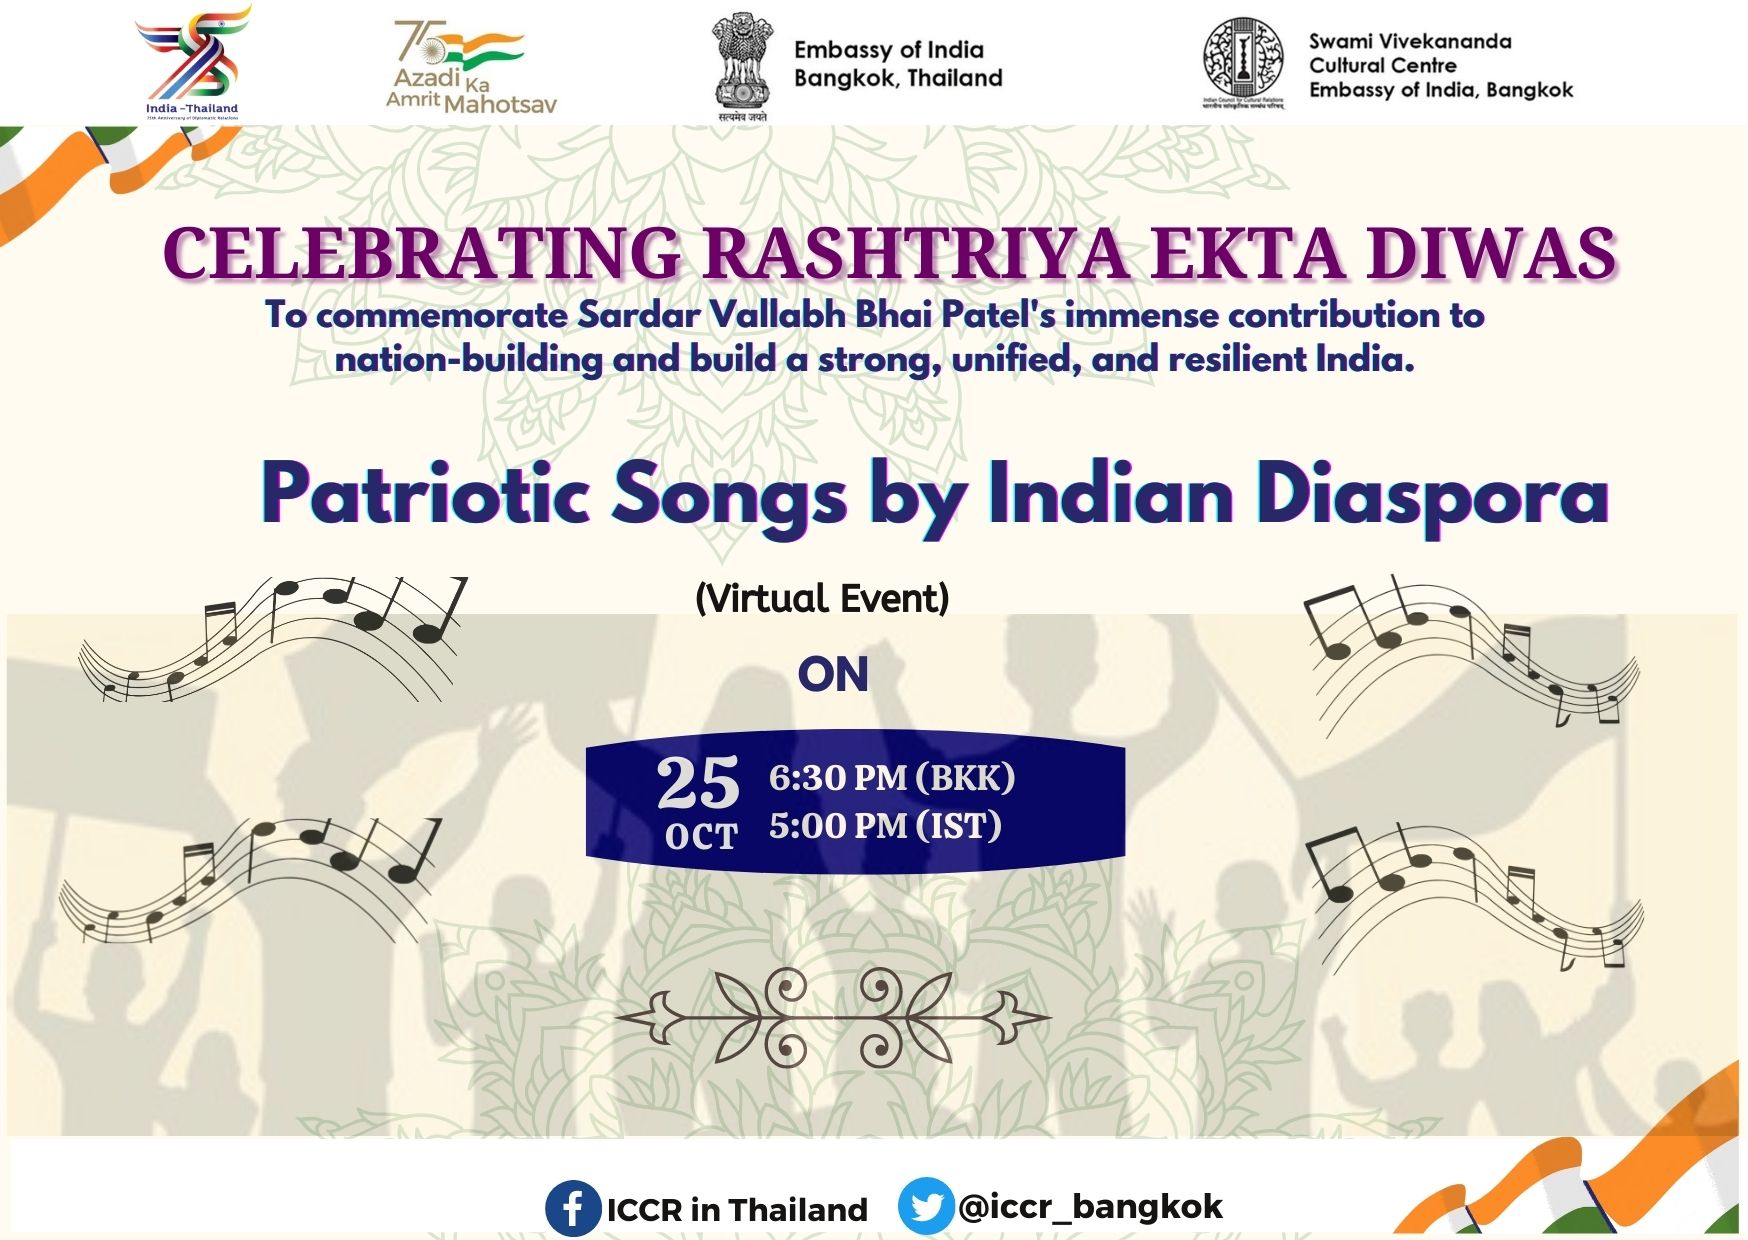 SVCC presents Patriotic Songs by the Indian Diaspora Celebrating Rashtriya Ekta Diwas Week from October 25–31, 2022,